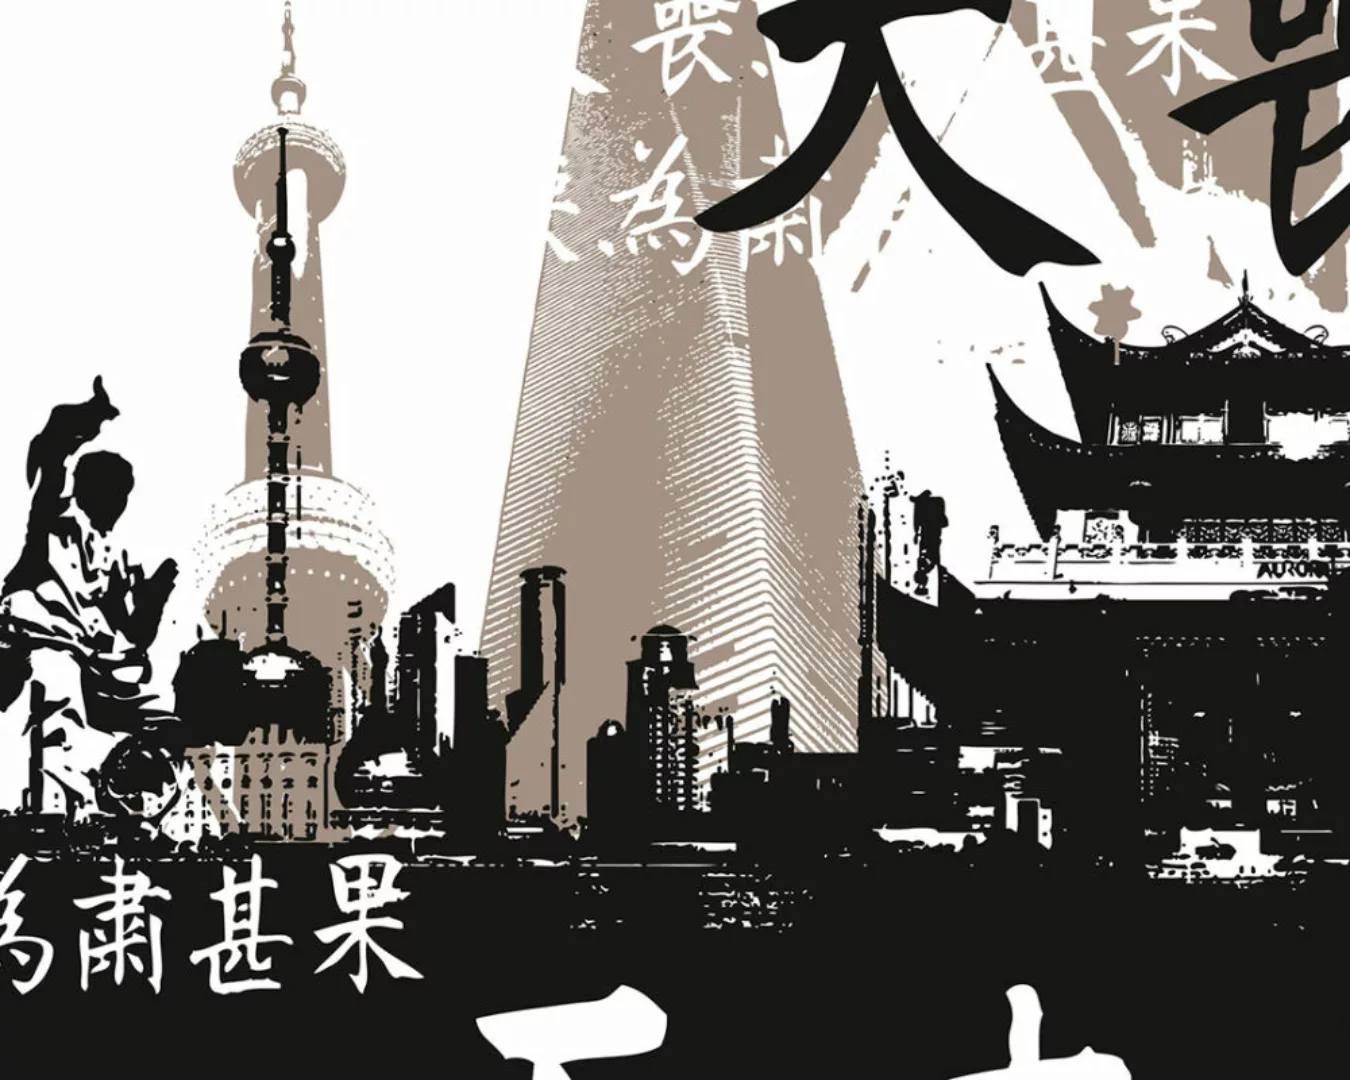 Fototapete "Shanghai" 4,00x2,50 m / Strukturvlies Klassik günstig online kaufen